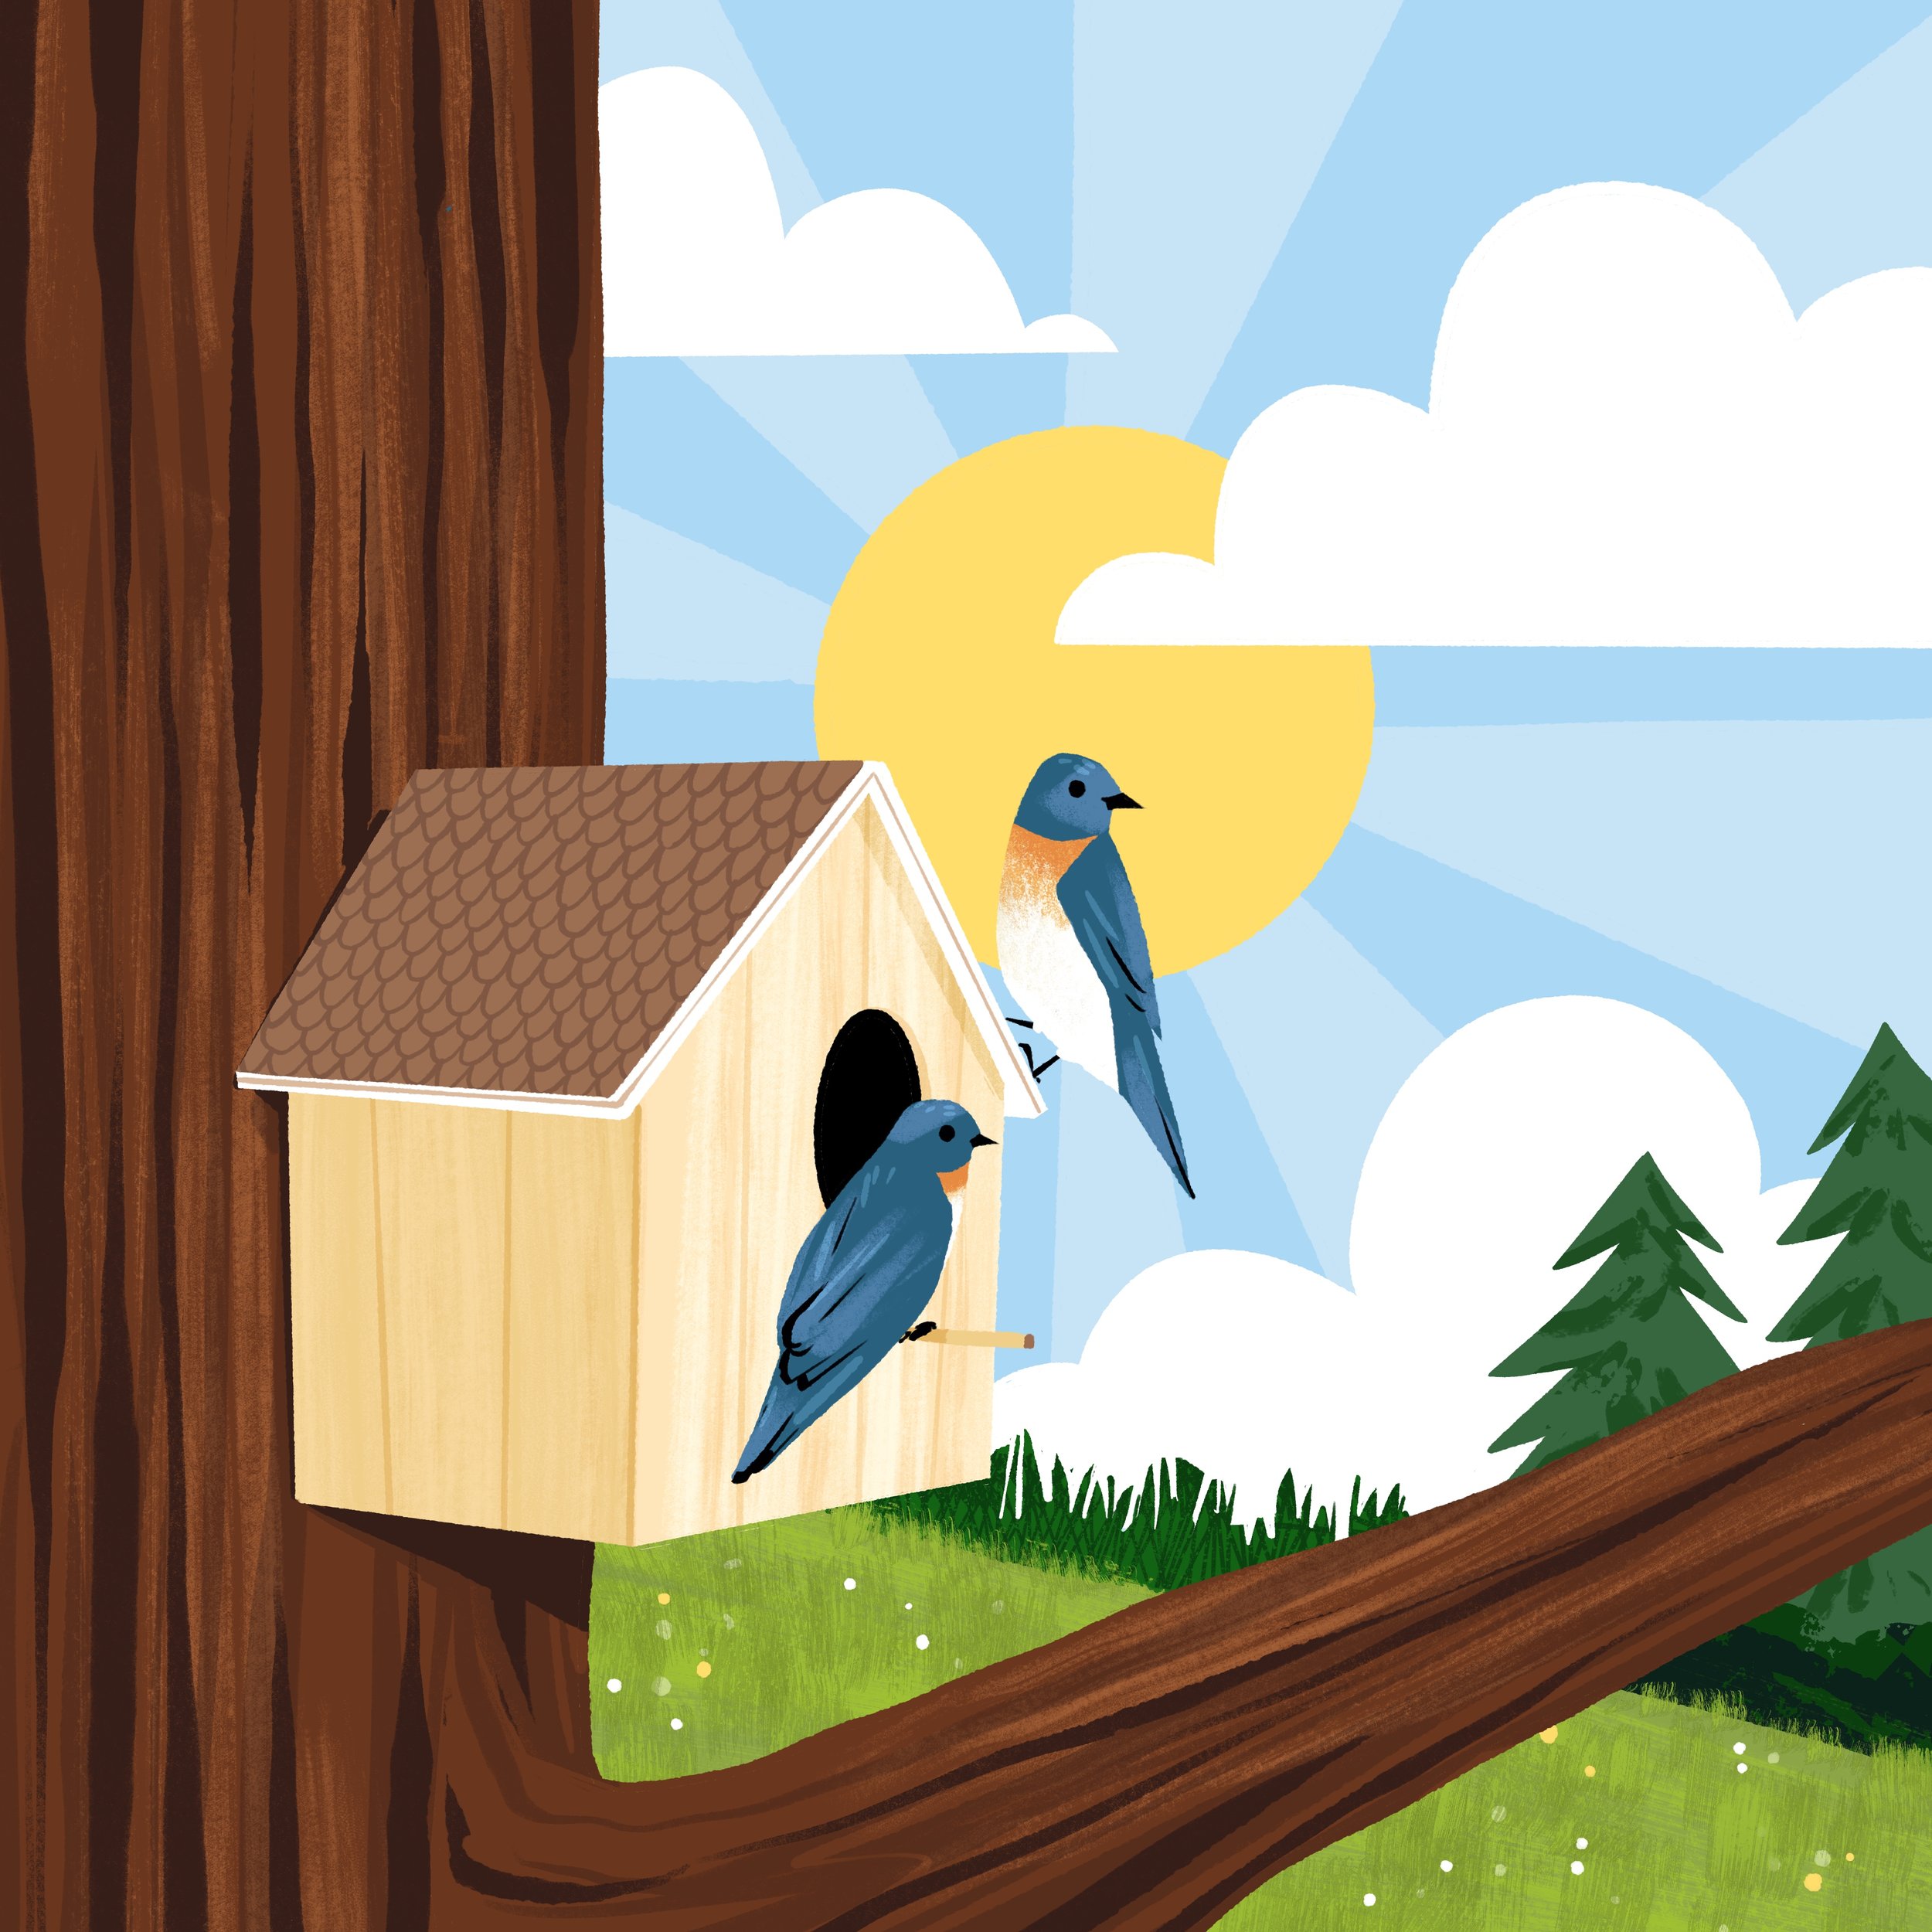 Drew Bardana Illustration - Morning Birds and a Birdhouse